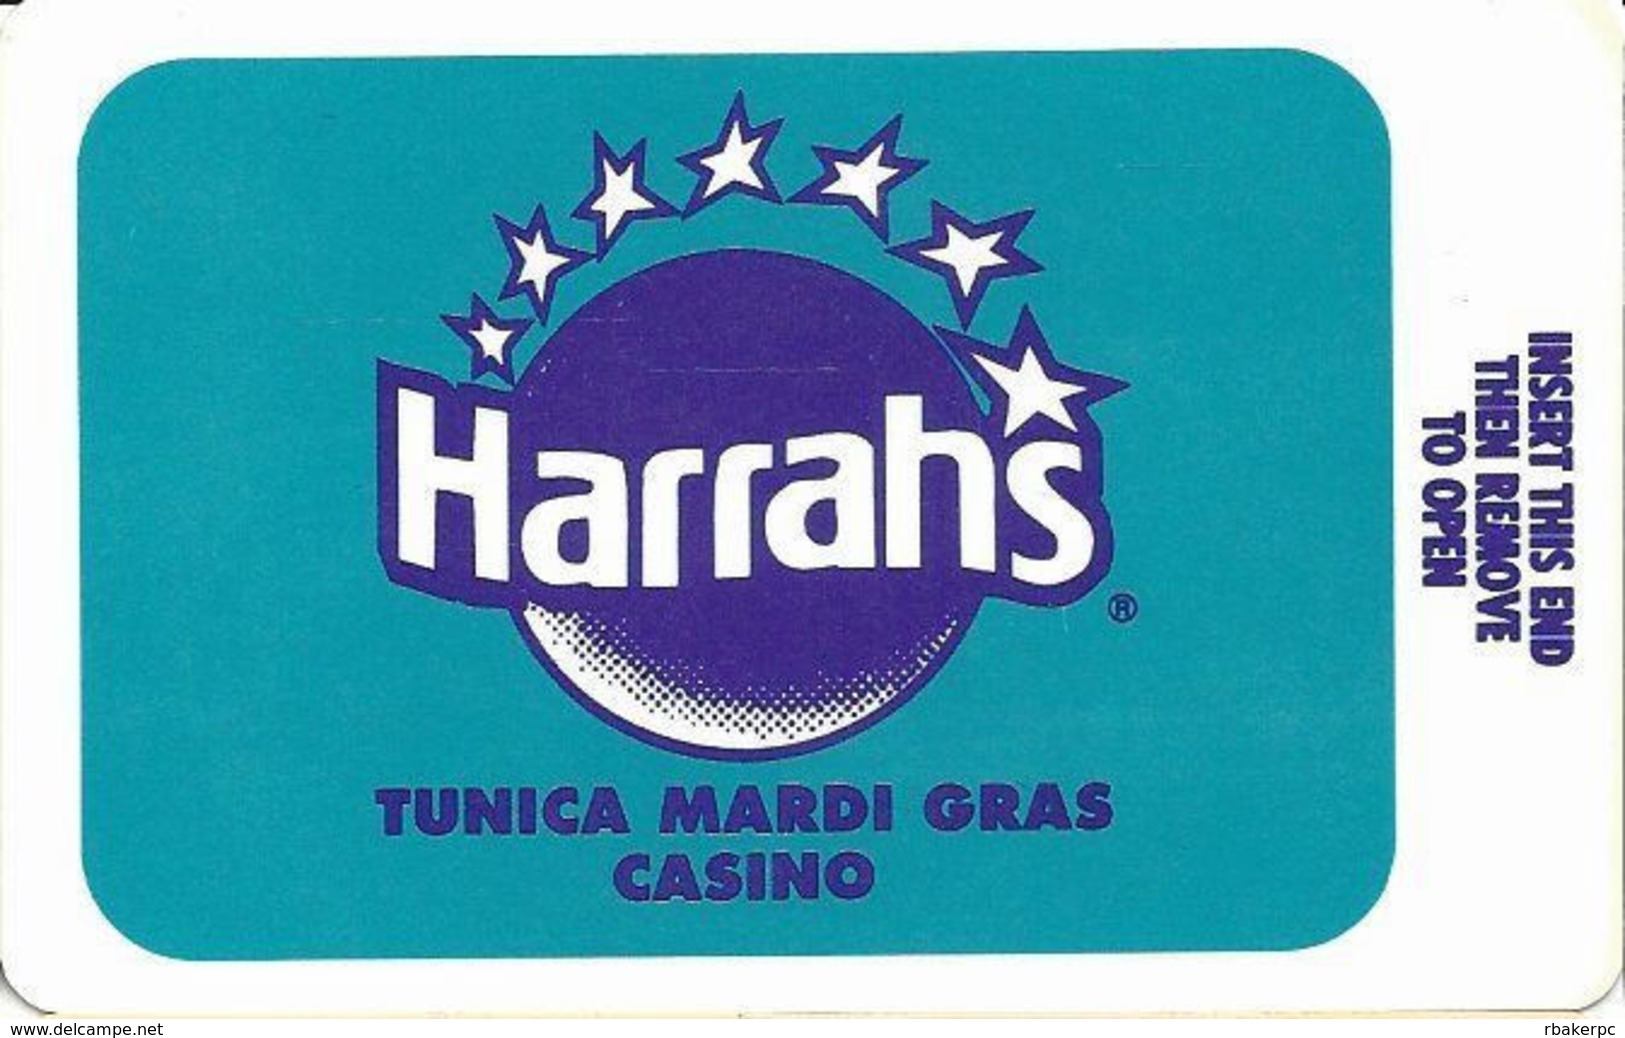 Harrah's Casino - Tunica MS - Hotel Room Key Card - Cartes D'hotel